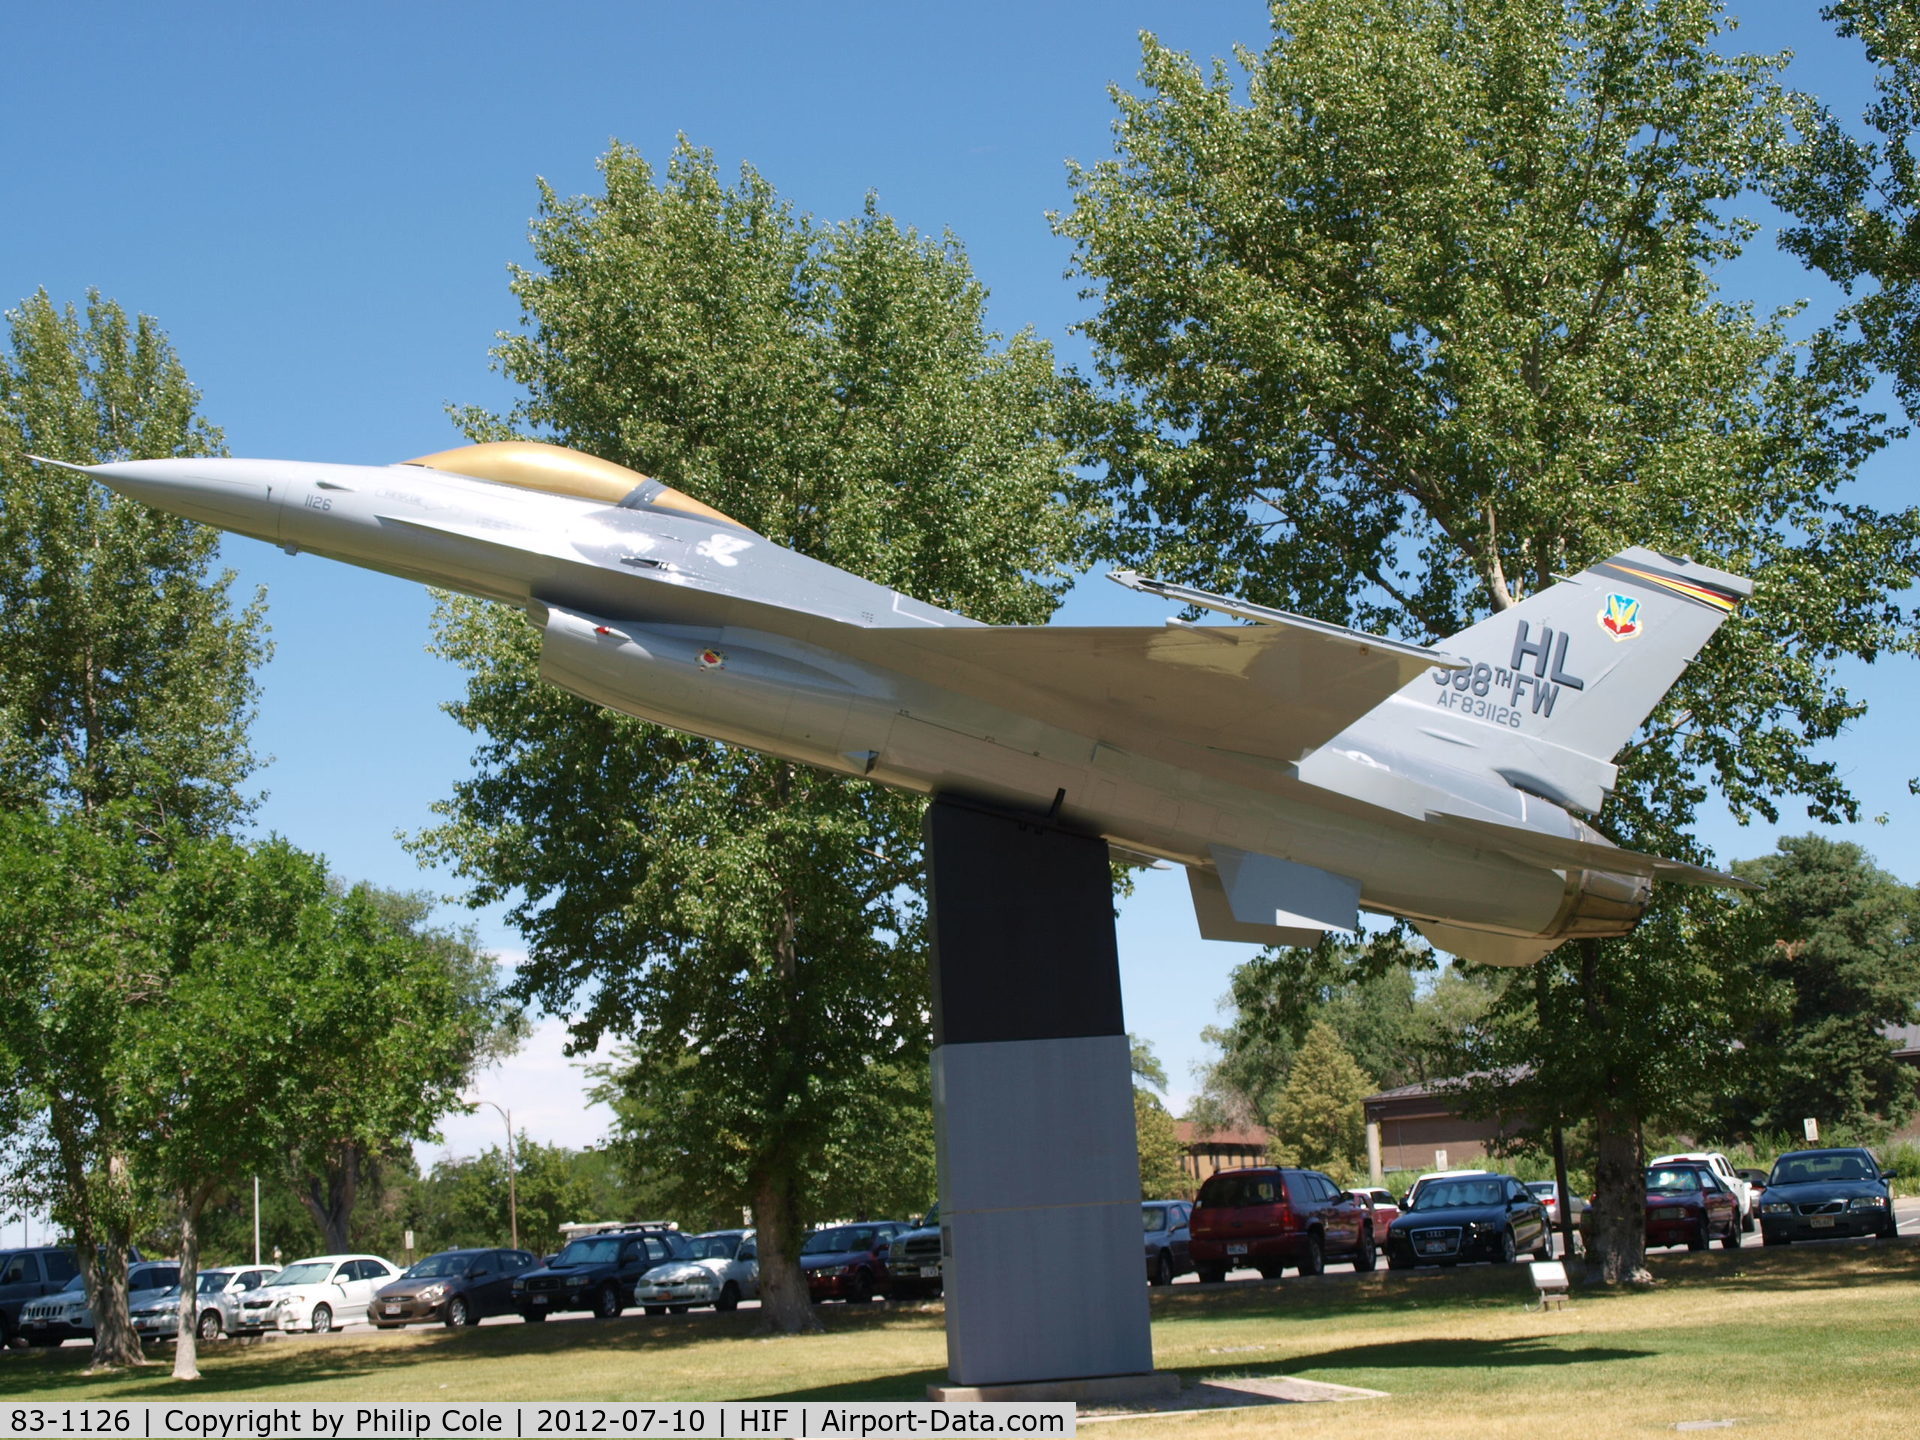 83-1126, 1983 General Dynamics F-16C Fighting Falcon C/N 5C-9, Hill Memorial Park